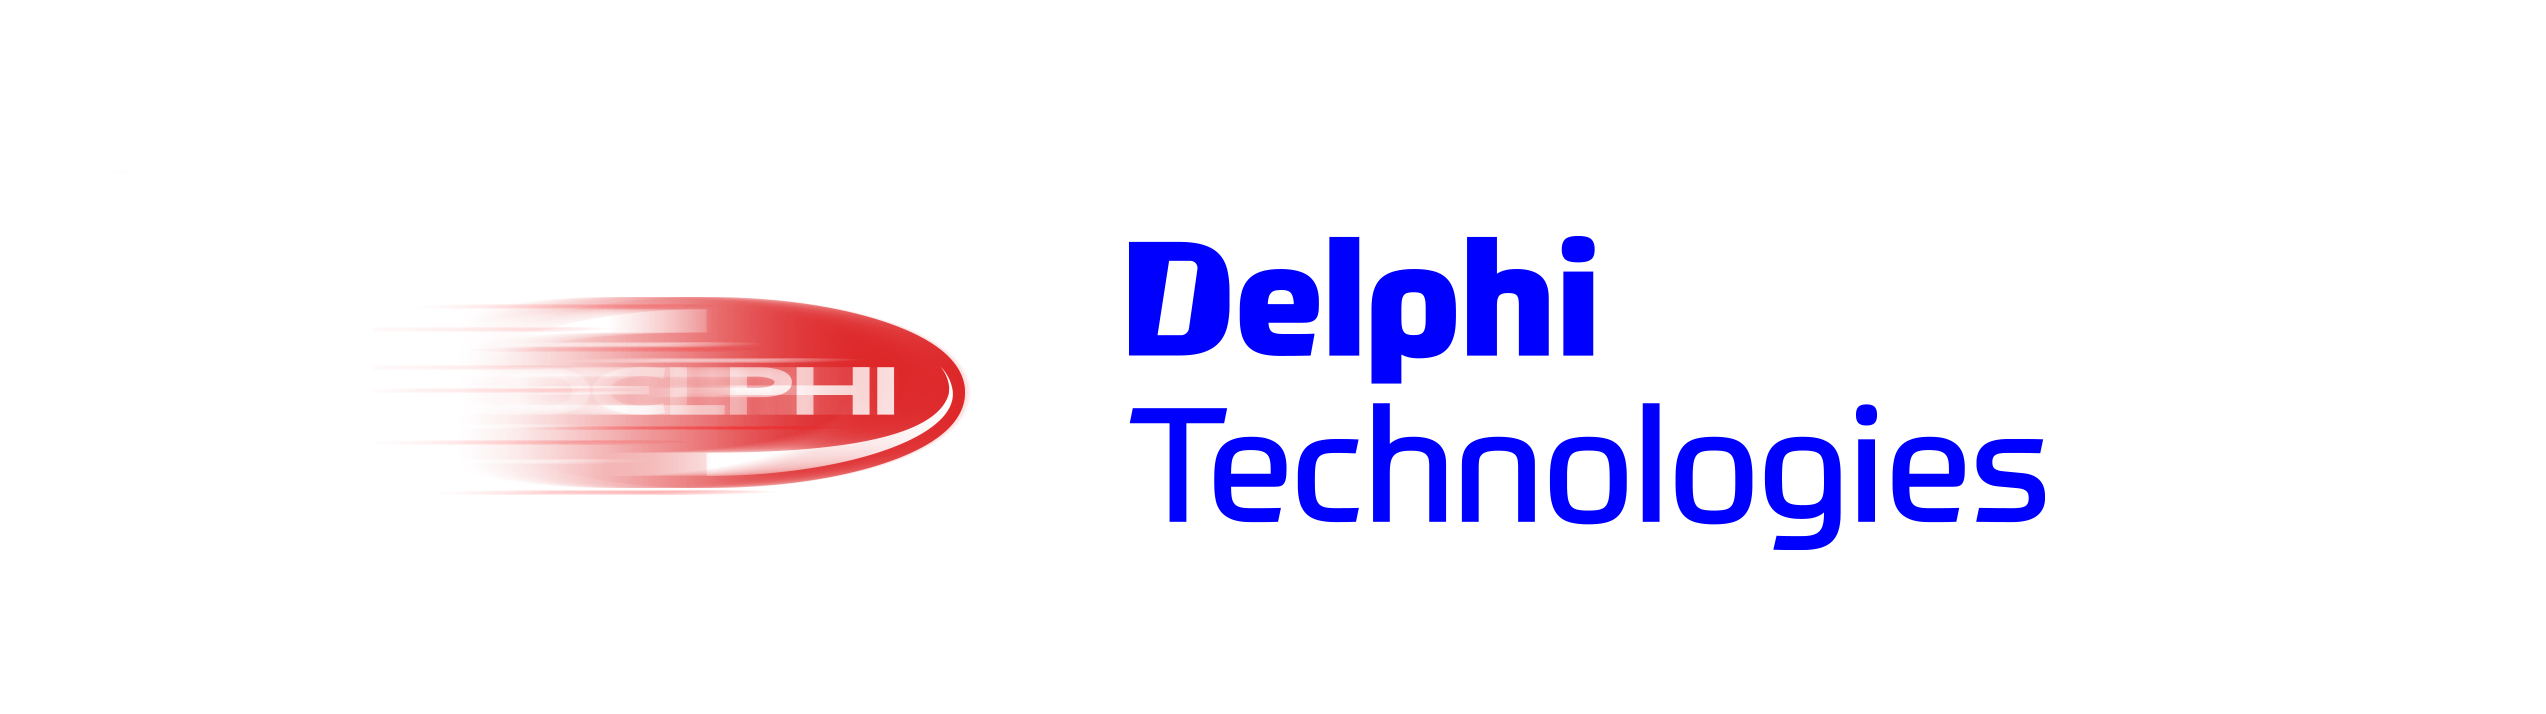 Delphi Logo - Delphi Technologies chooses Automechanika to reveal a new brand ...